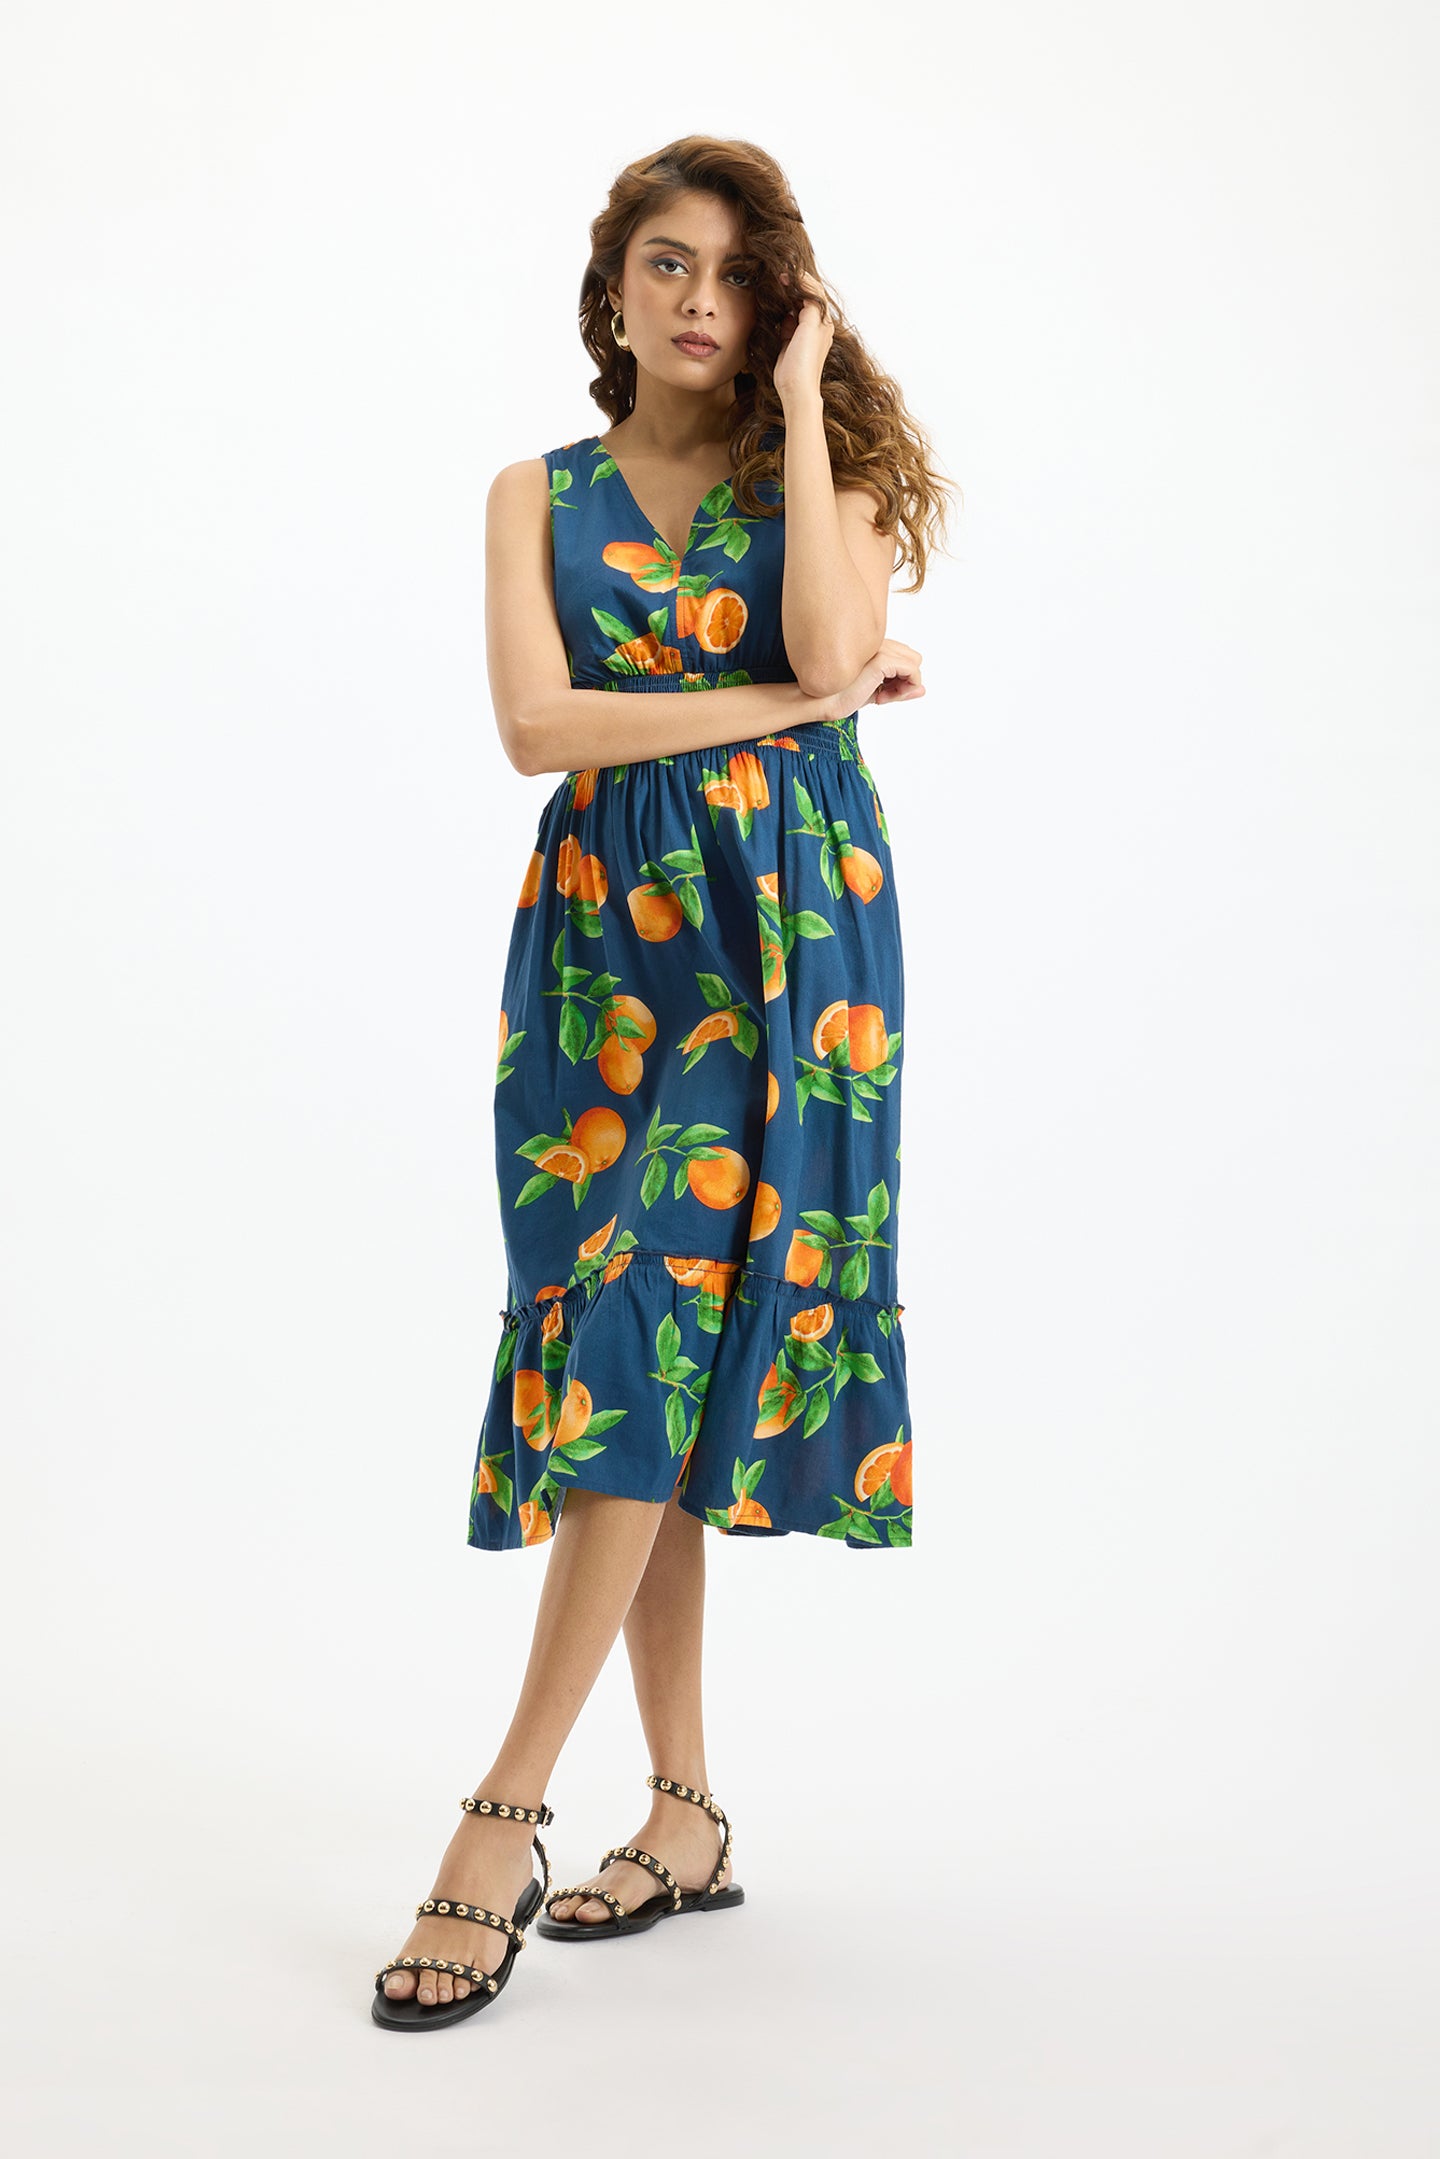 Iti|Breezy Fruit Print Cotton Dress with Pockets